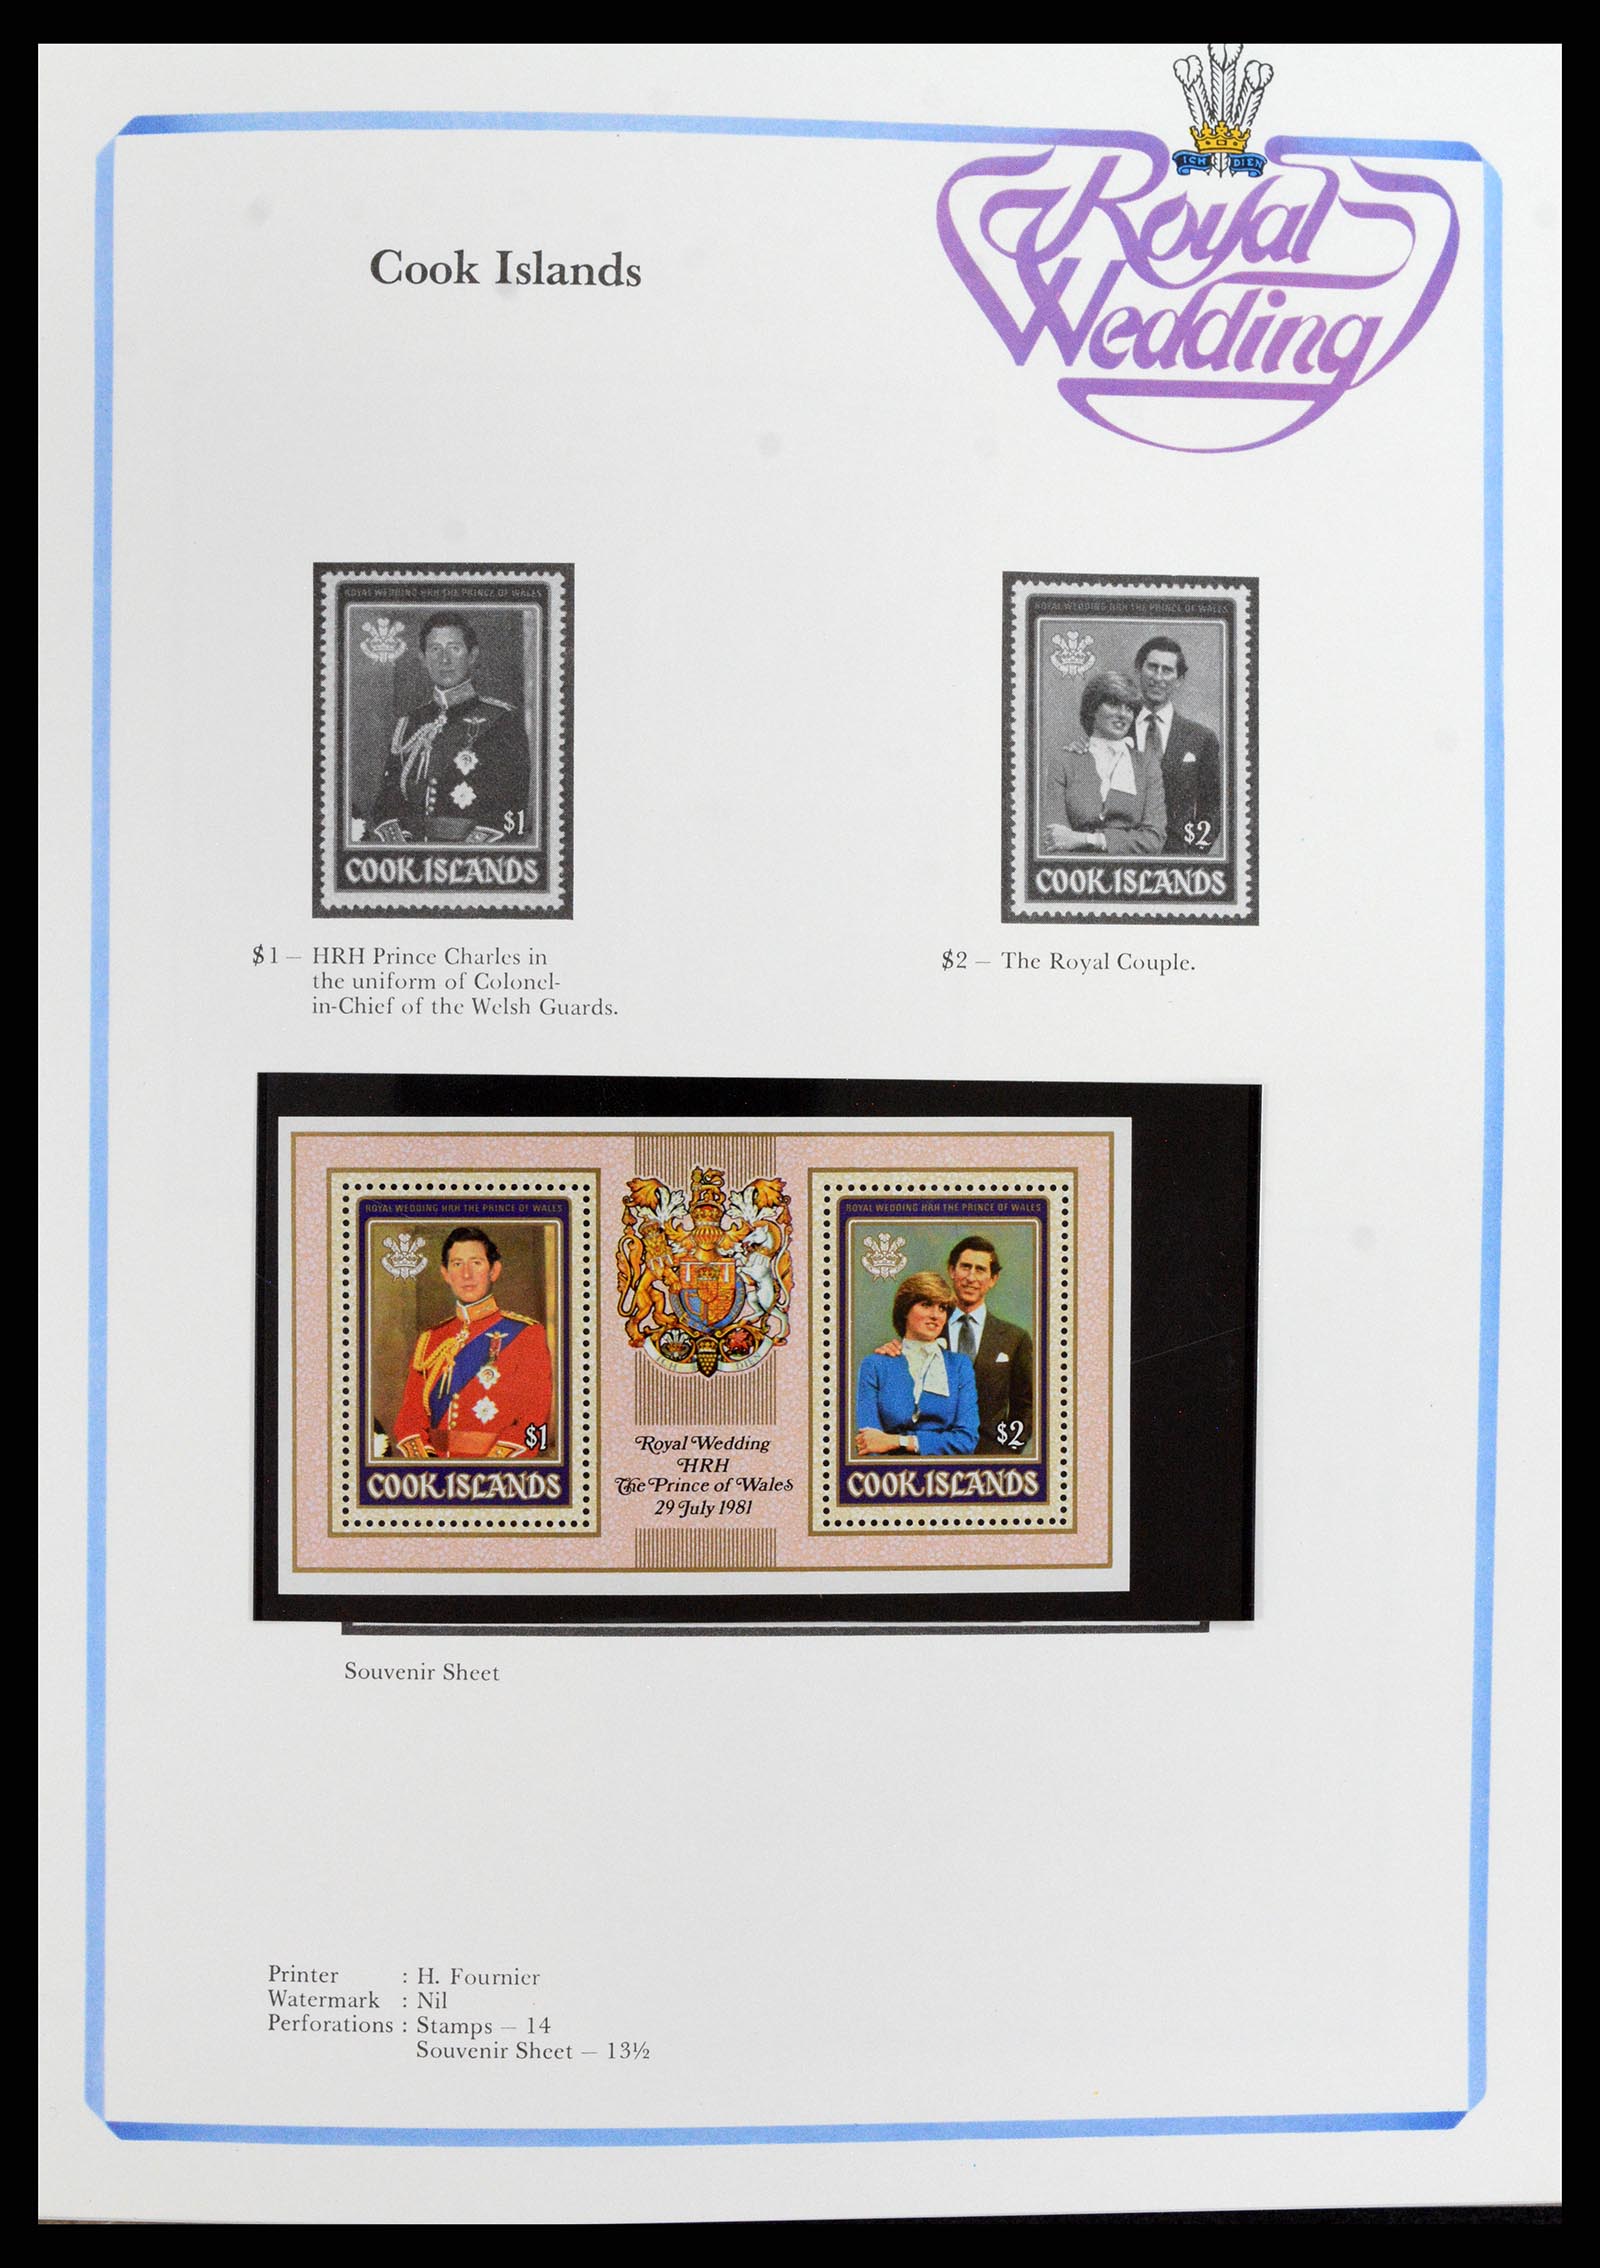 37818 095 - Stamp Collection 37818 Royal Wedding 1981.